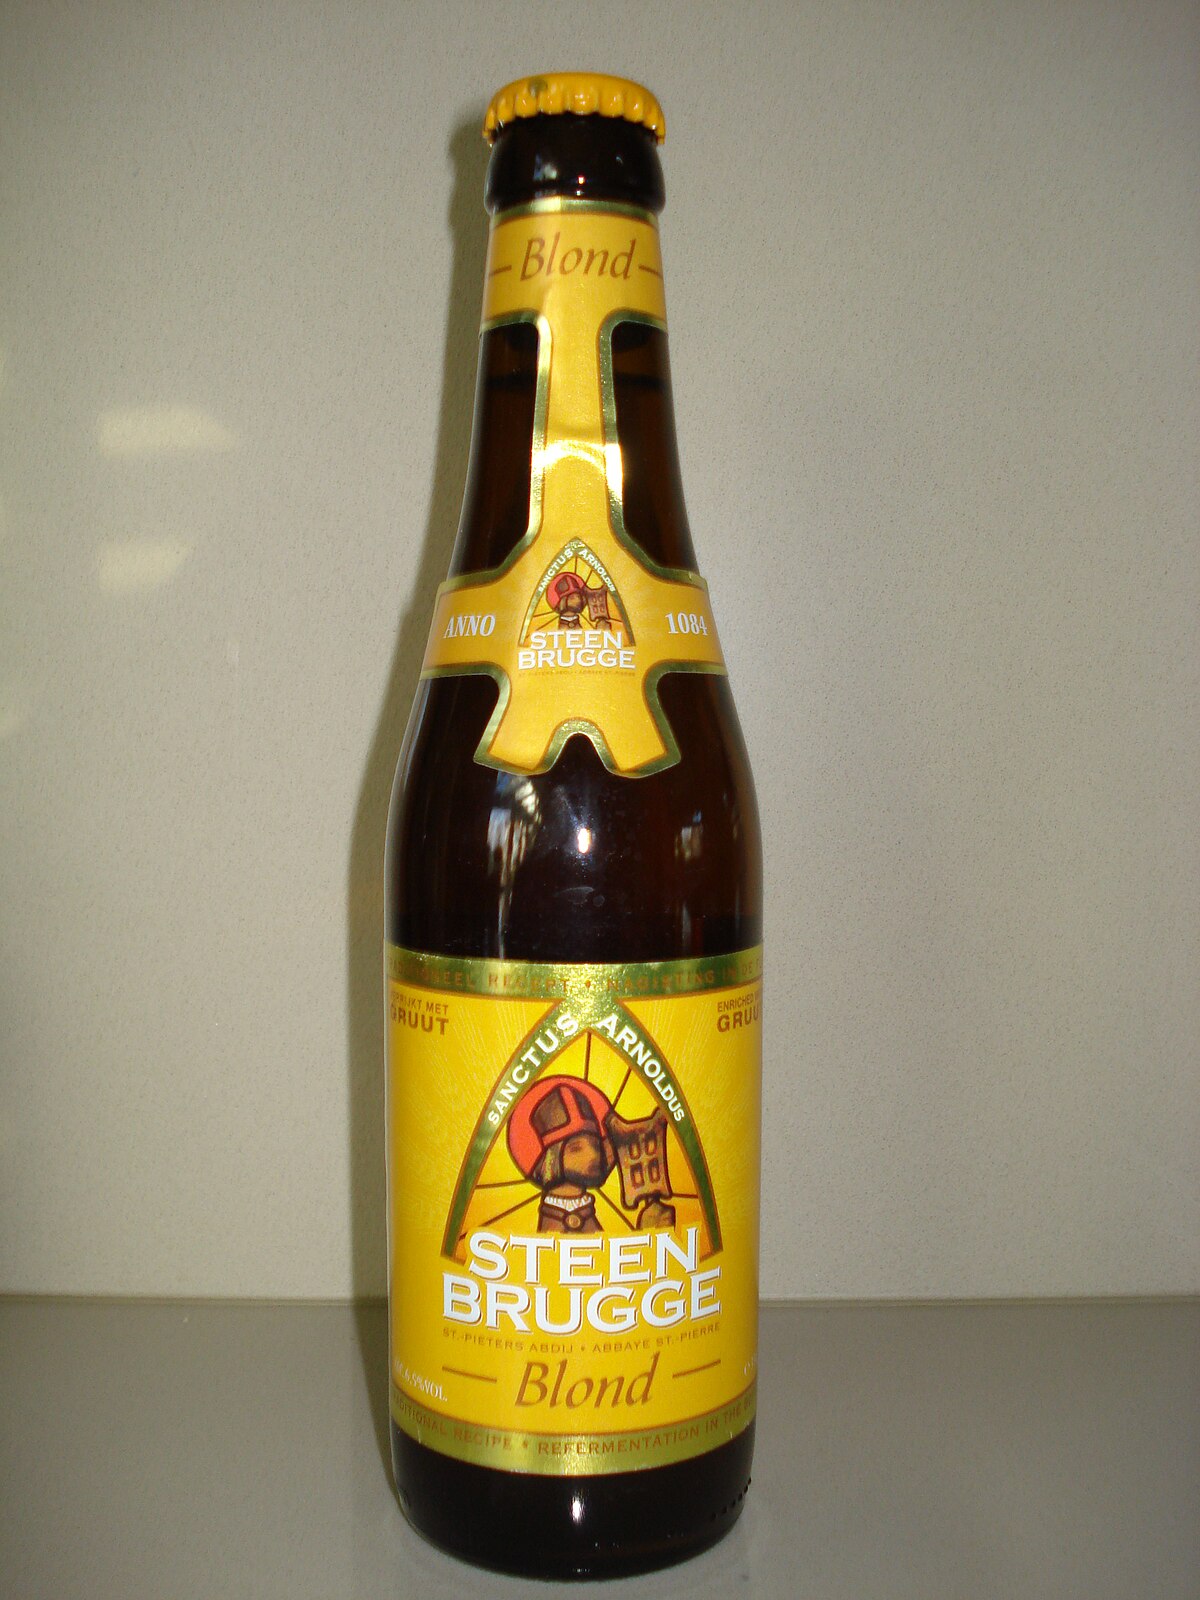 namens Archeologisch werk Steenbrugge (bier) - Wikipedia